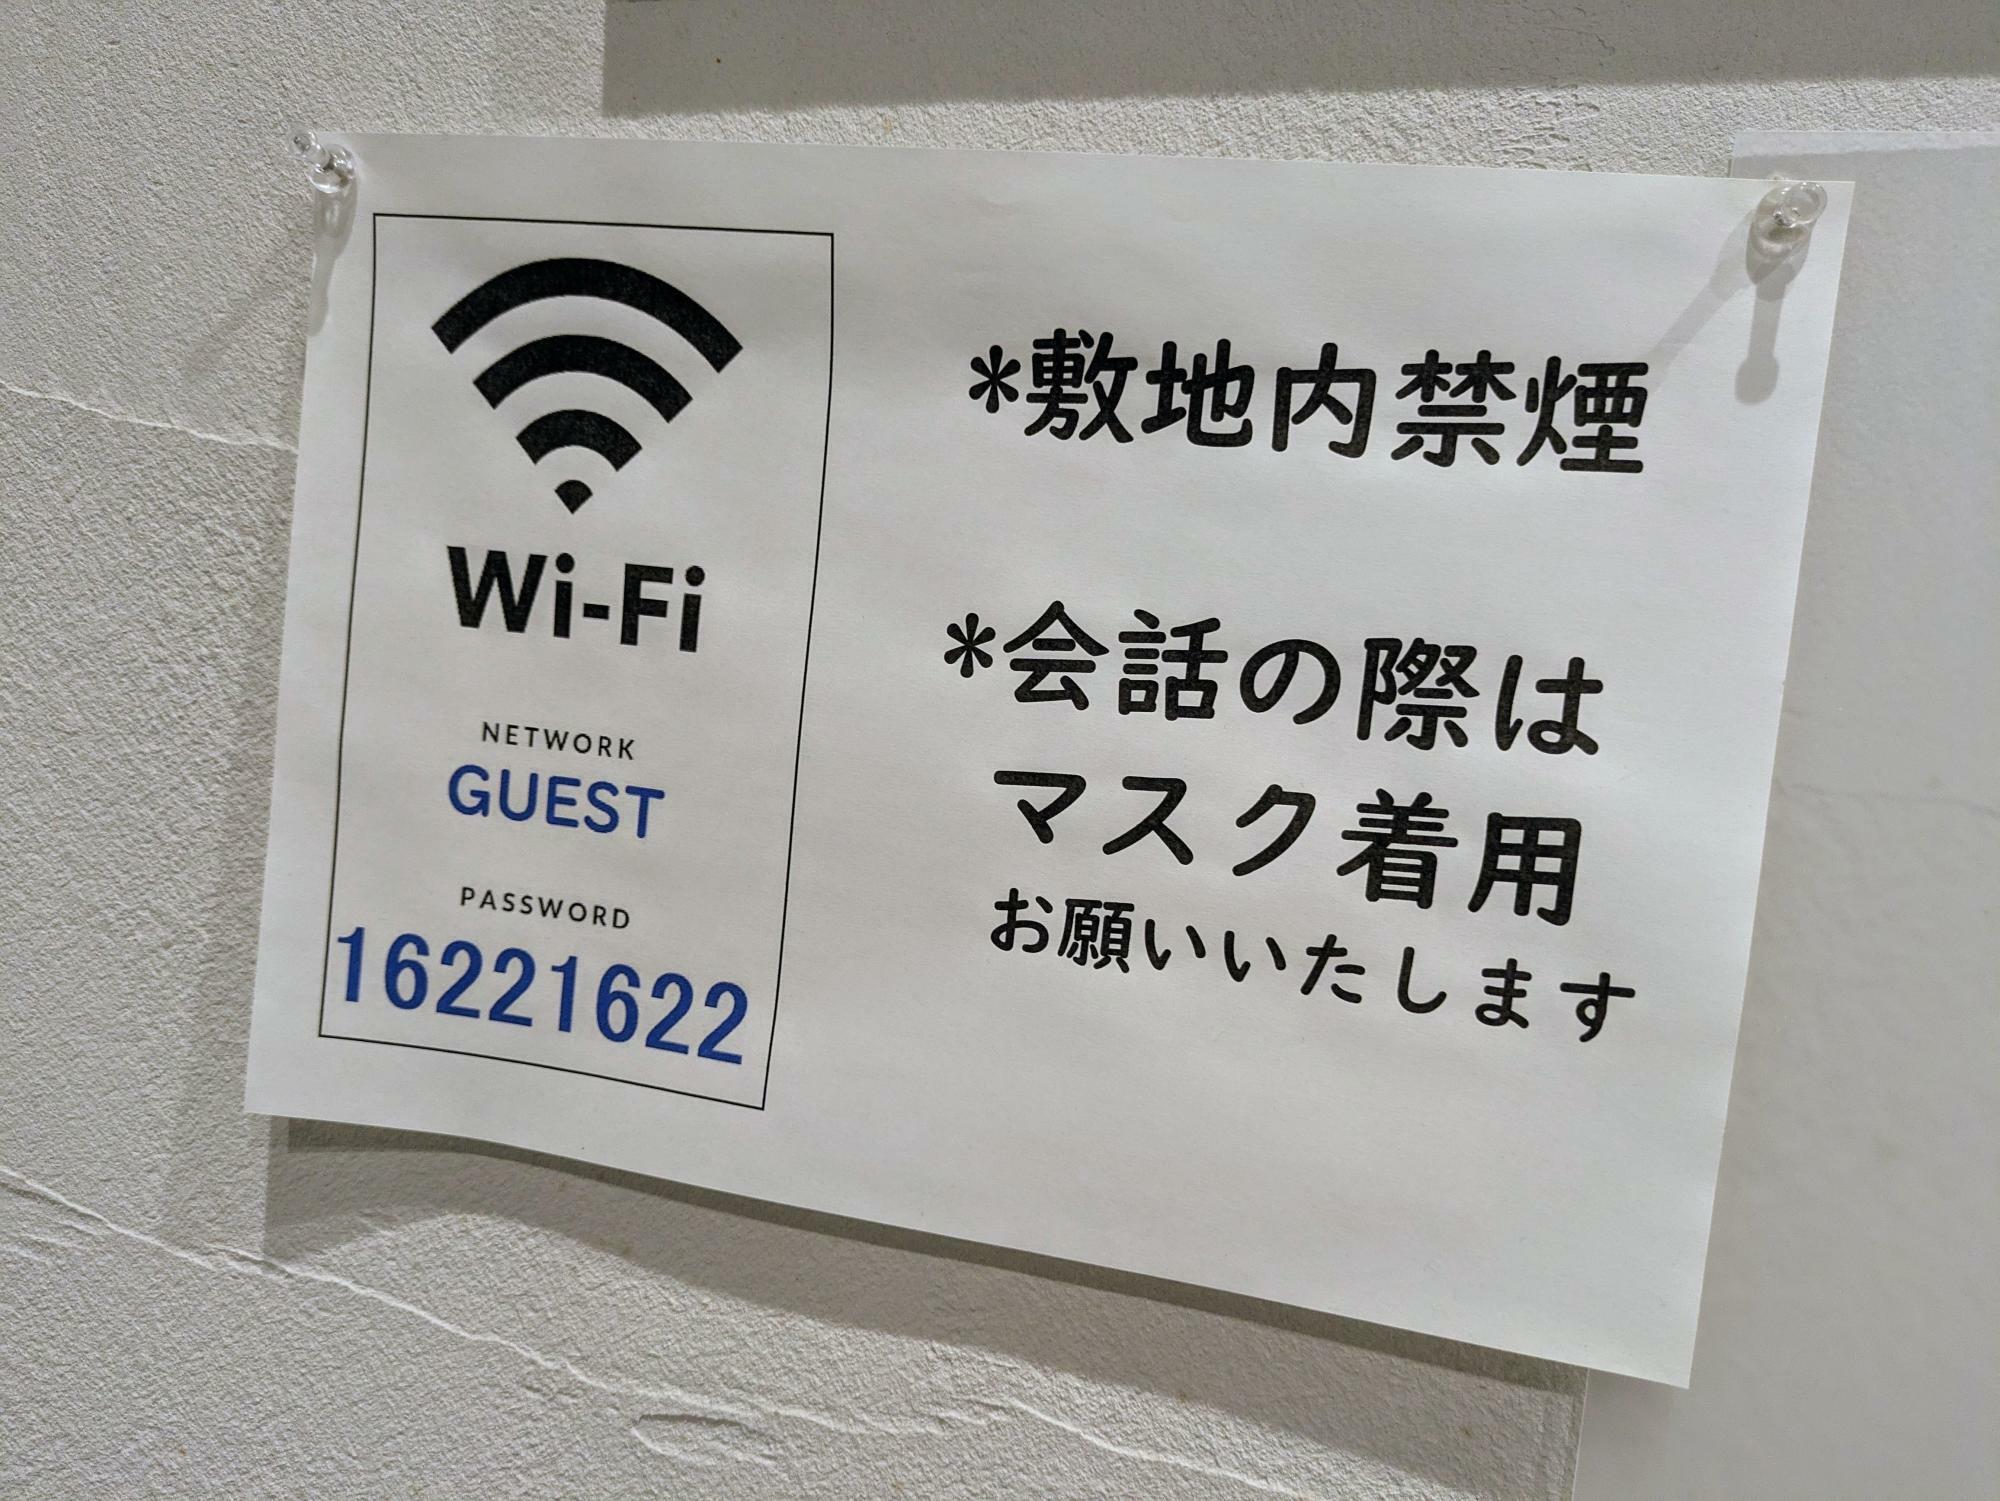 Wi-Fiもあって便利です